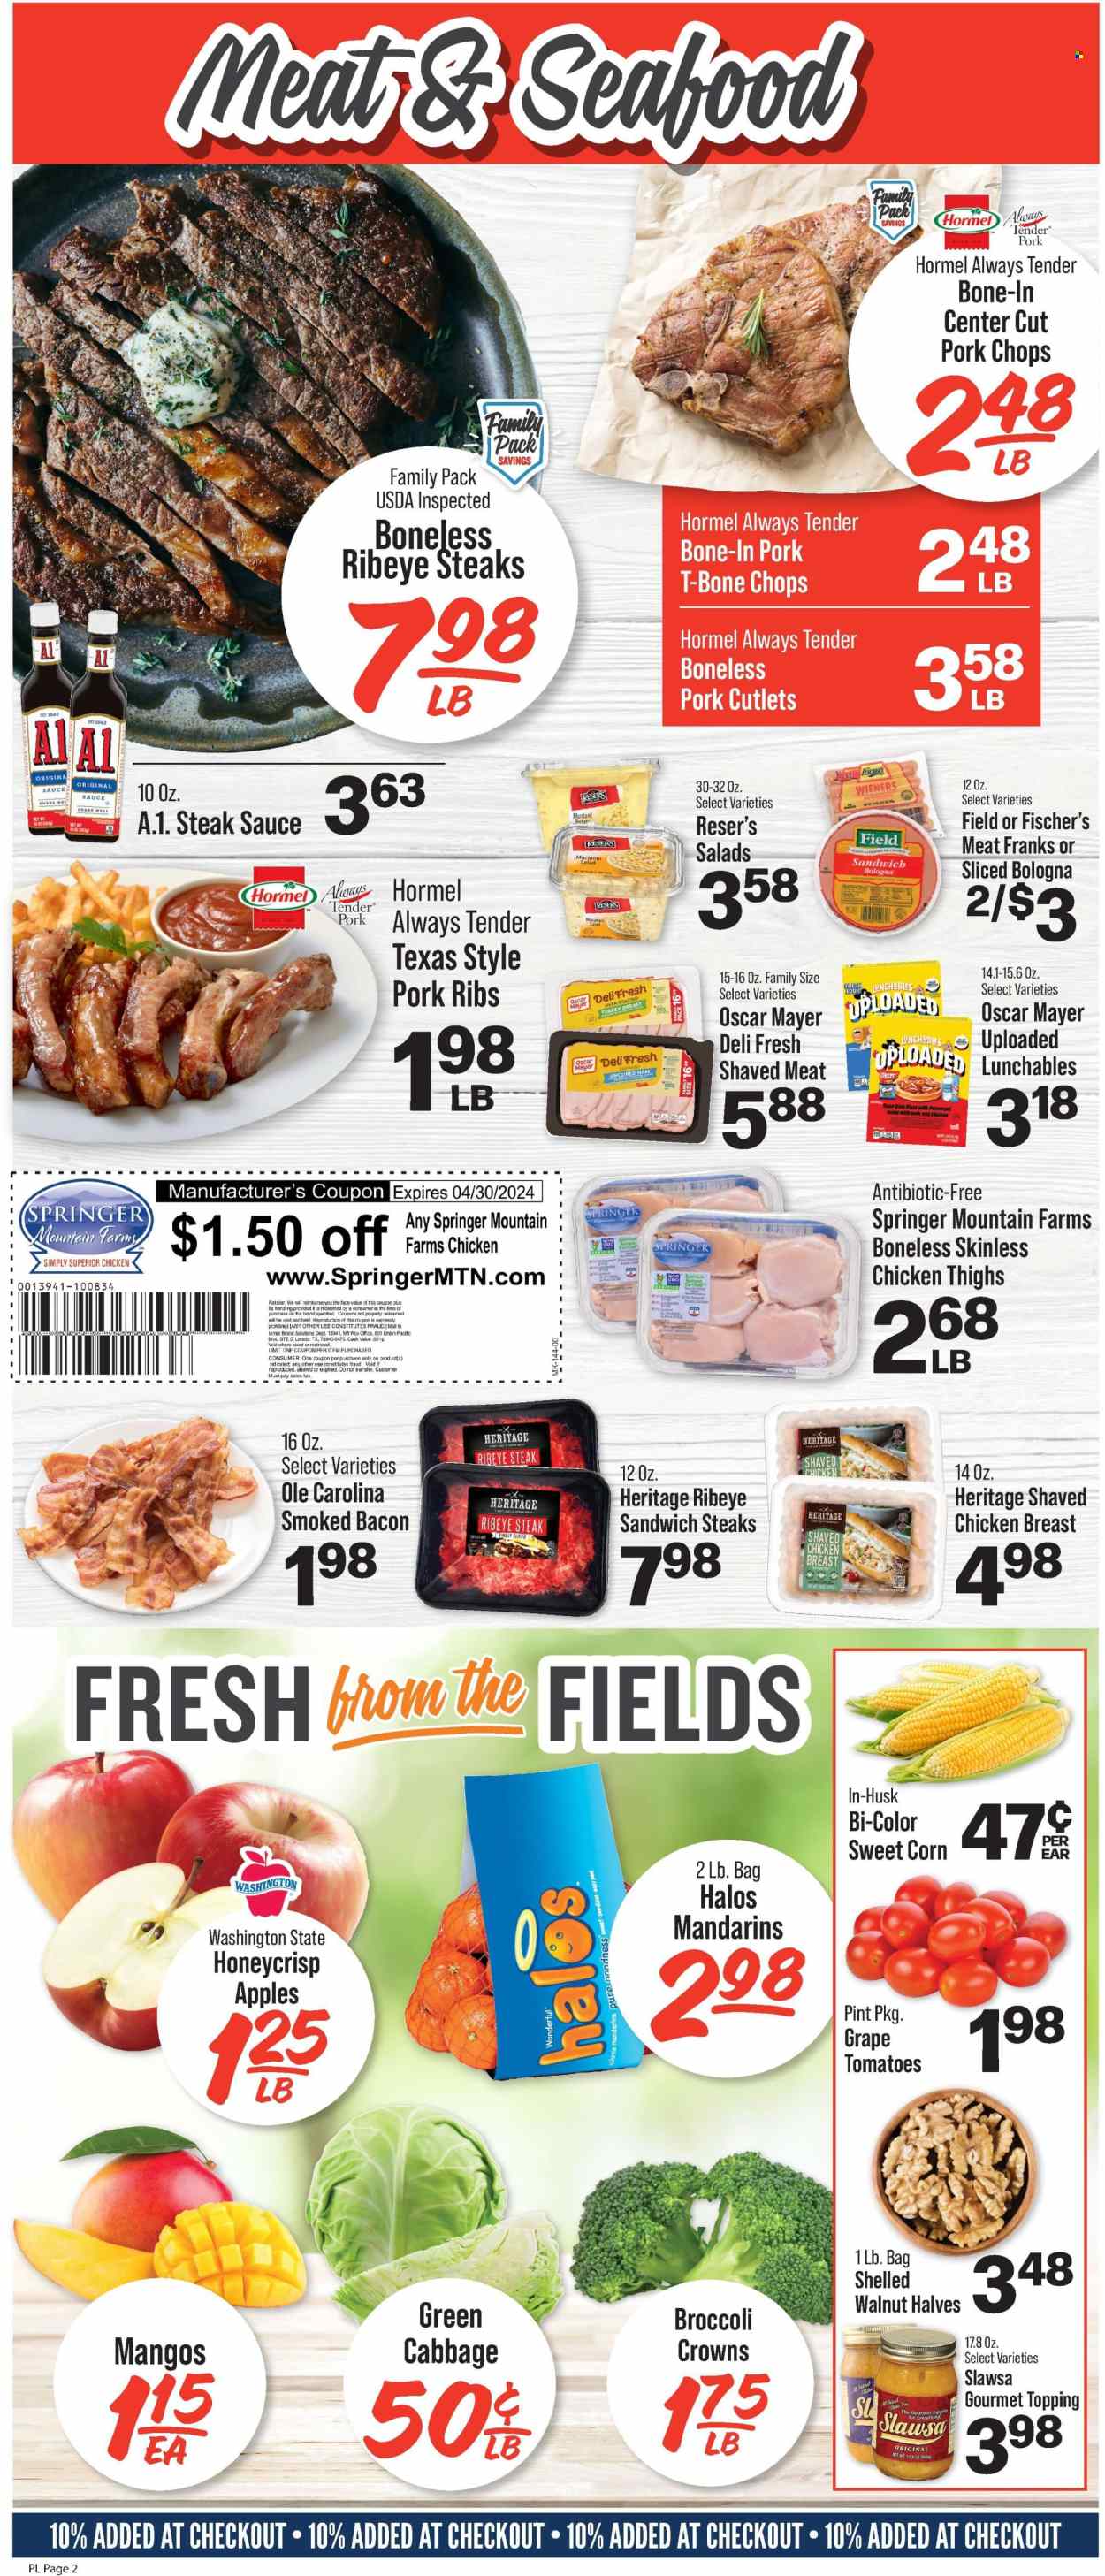 Price Less Foods ad  - 04.17.2024 - 04.23.2024.